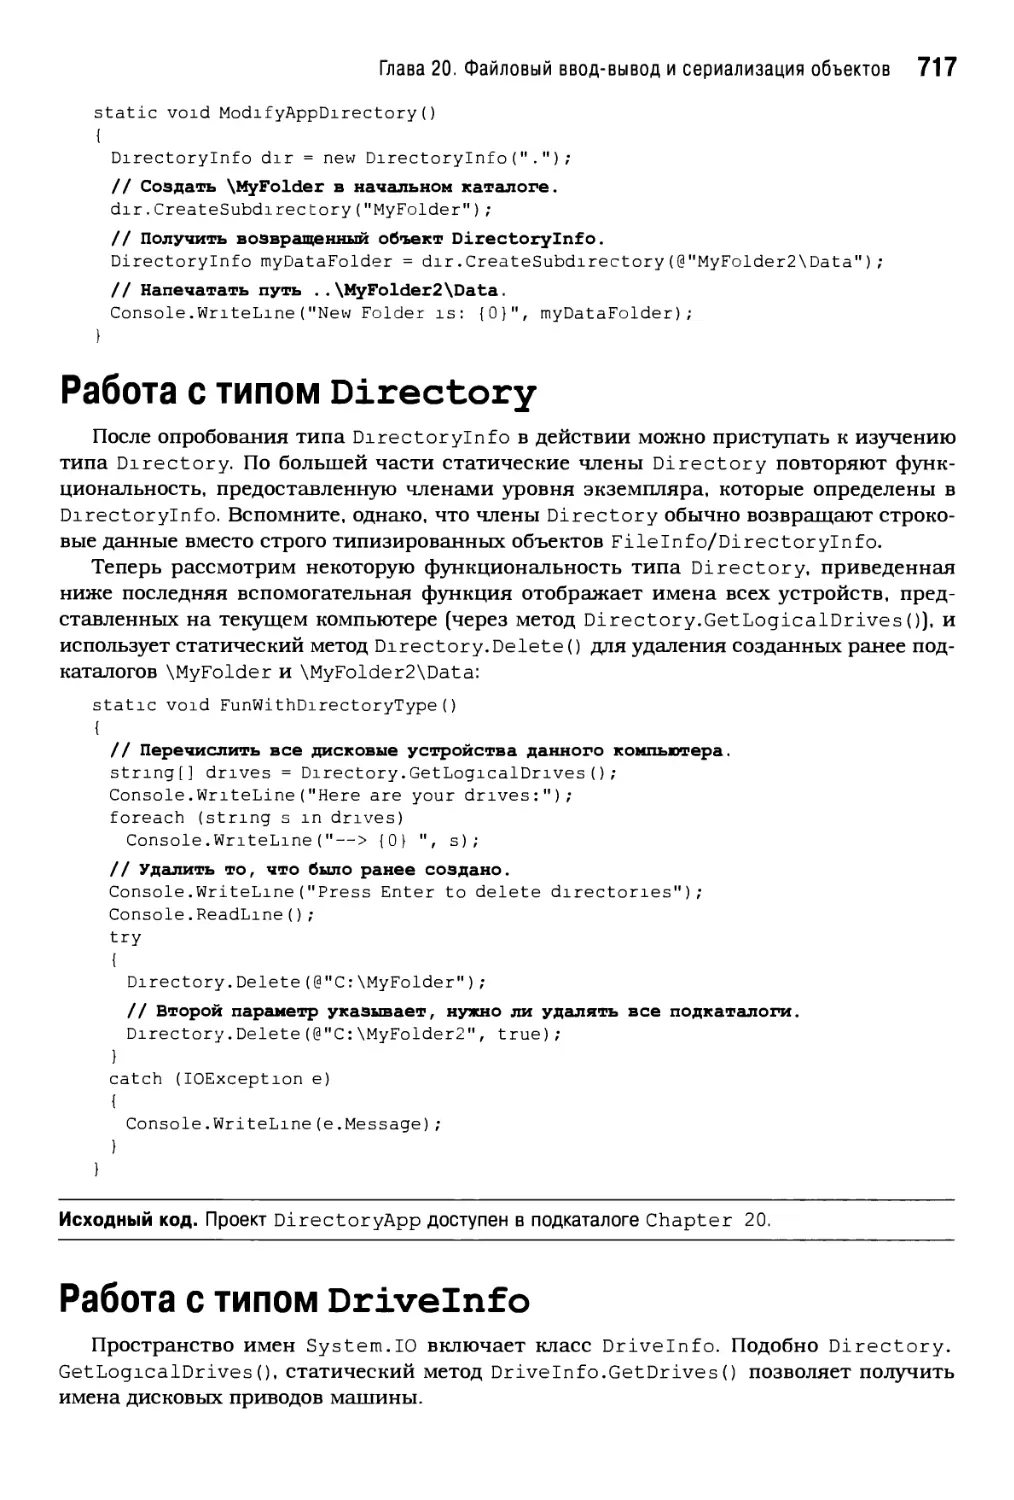 Работа с типом Directory
Работа с типом Drive Info